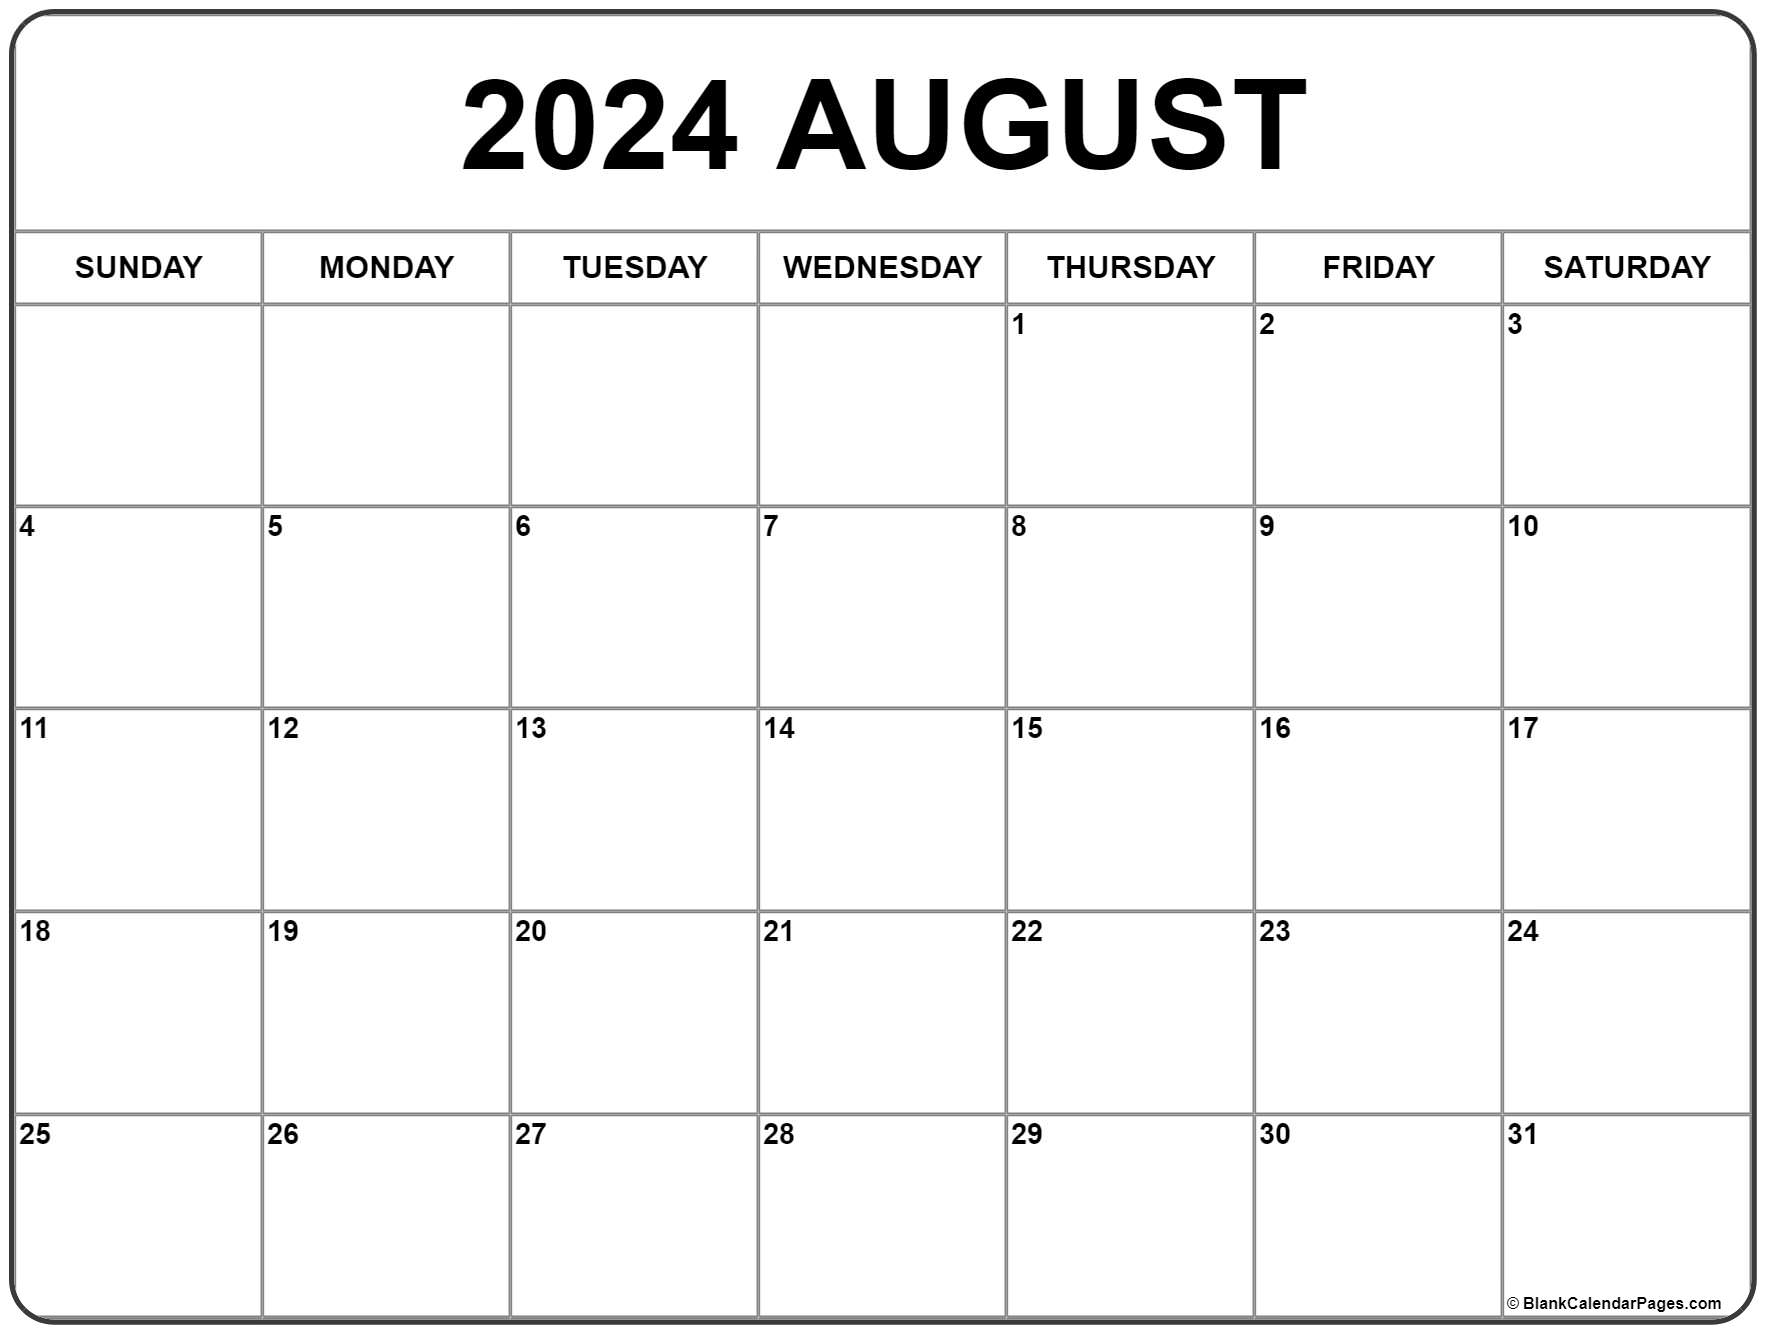 August Calendar 2021 Printable August 2021 calendar | free printable monthly calendars